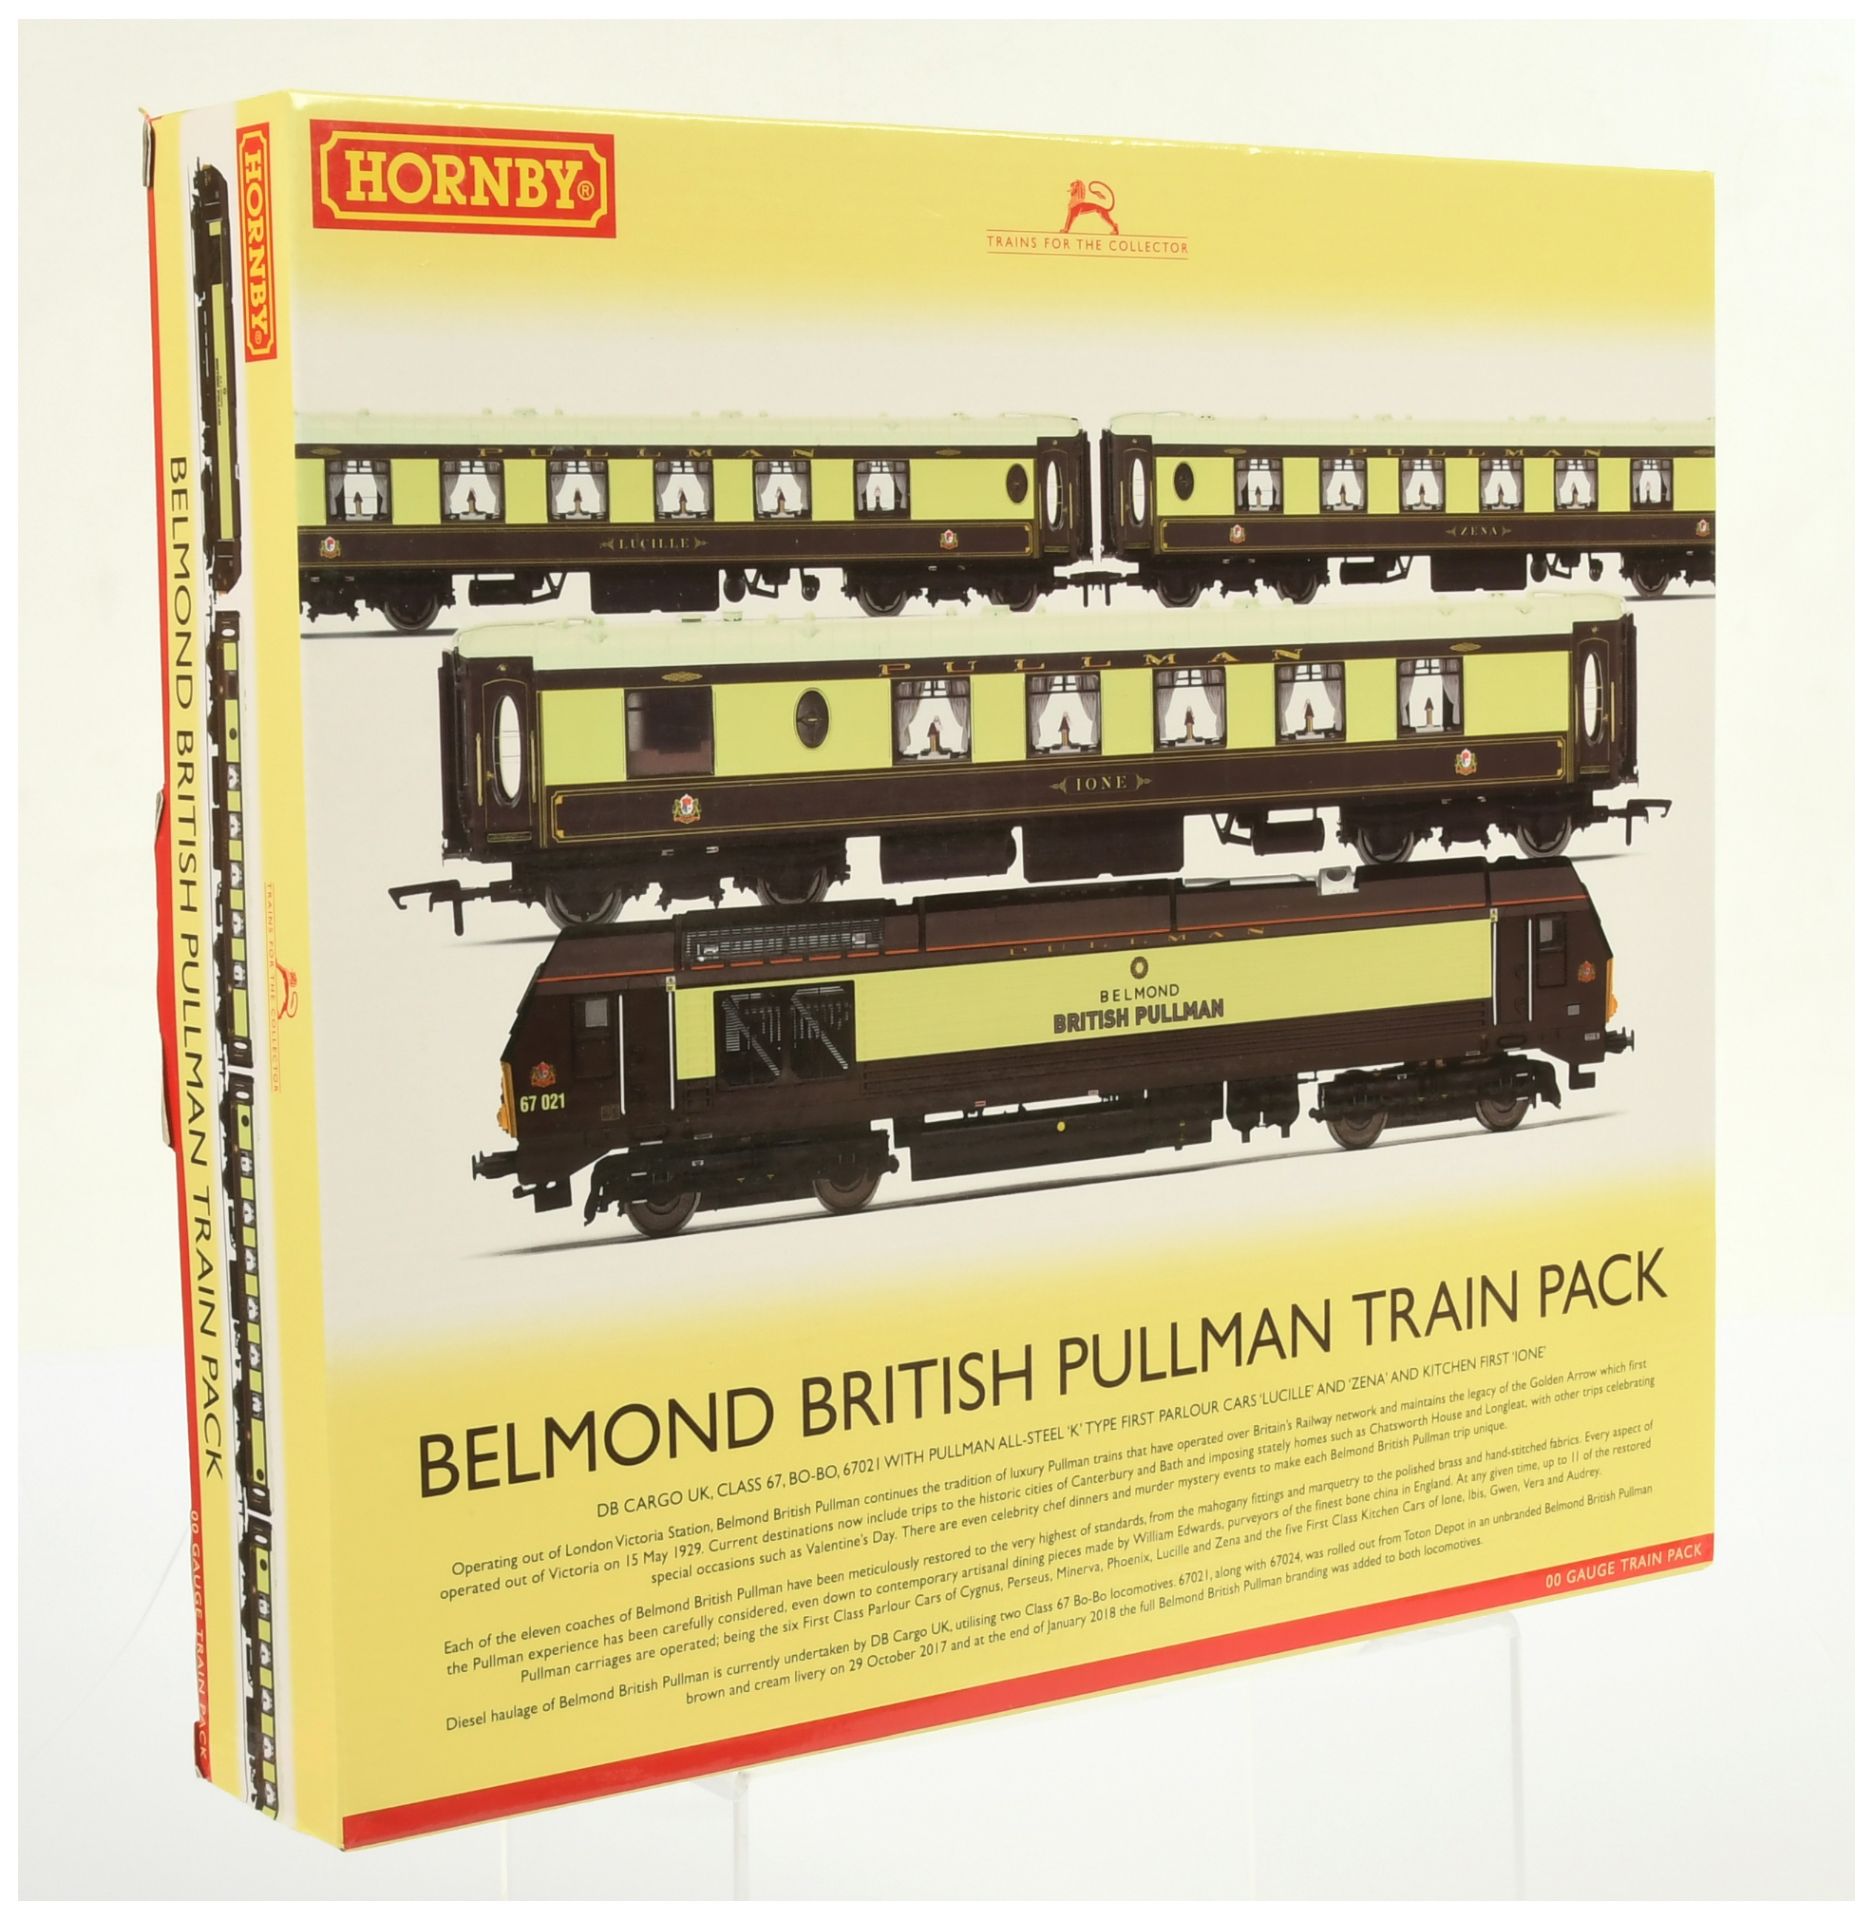 Hornby (China) R3750 "Belmond British Pullman" Train Pack 